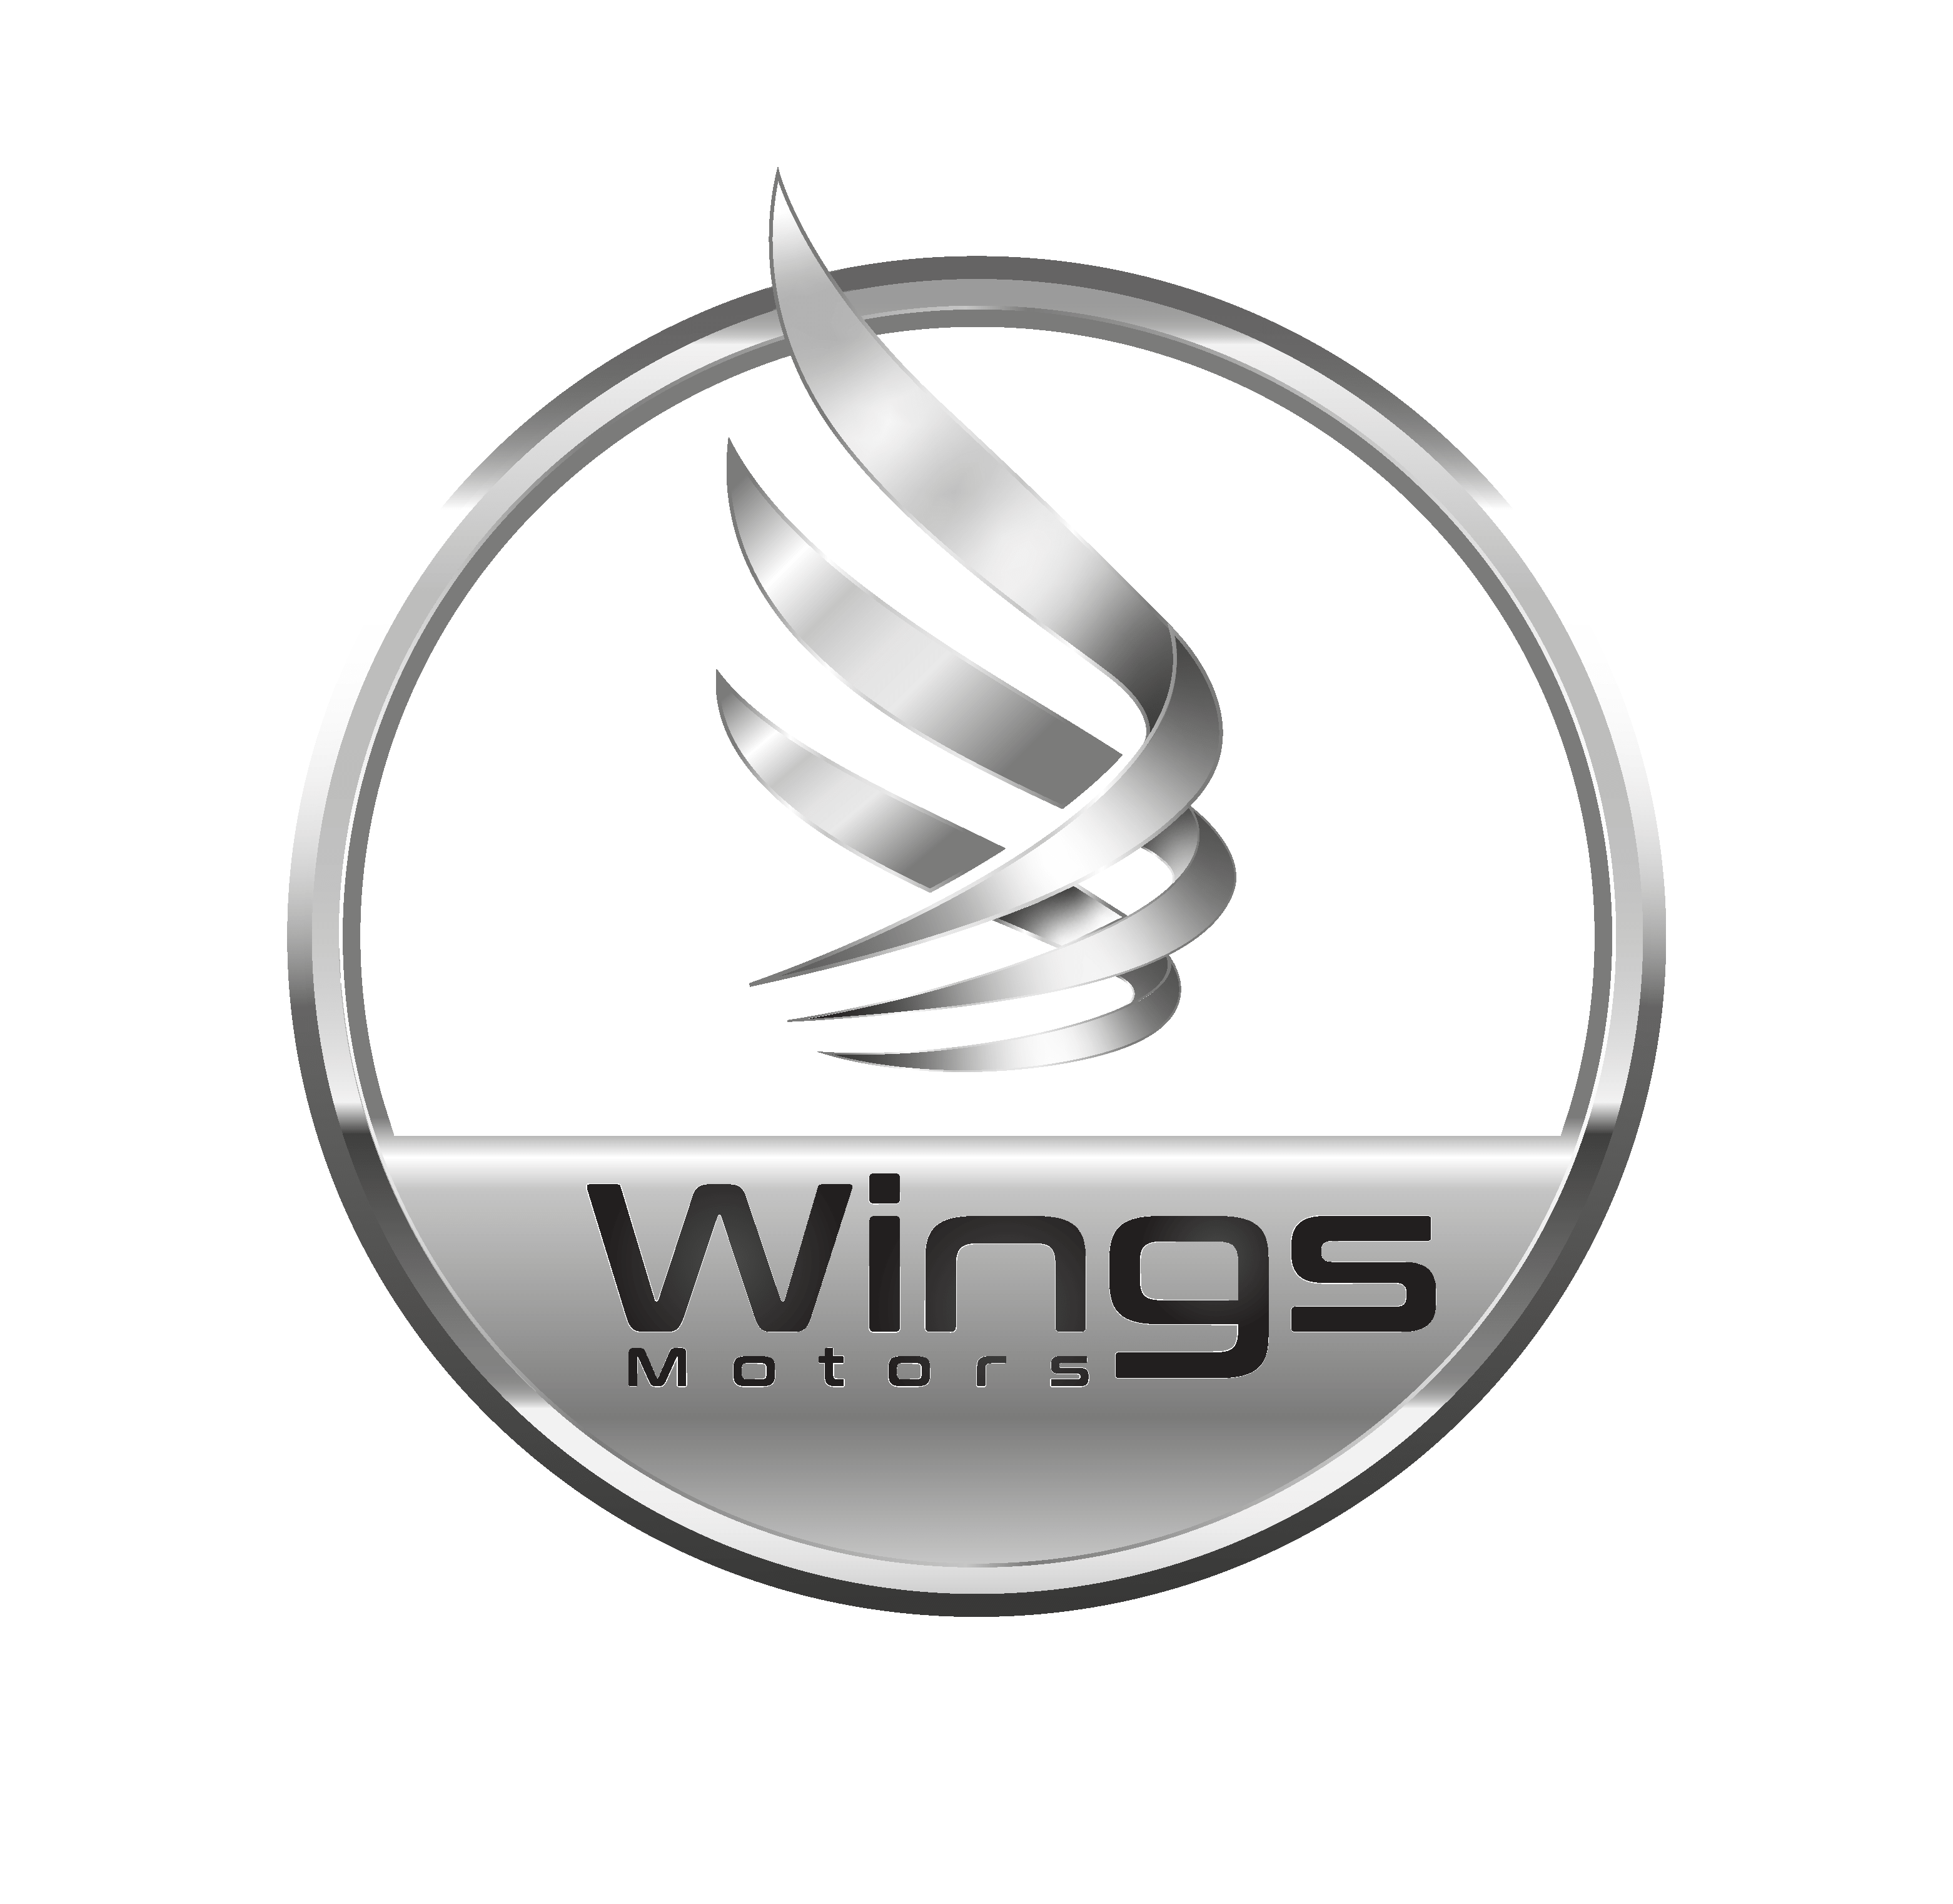 Wings Motors